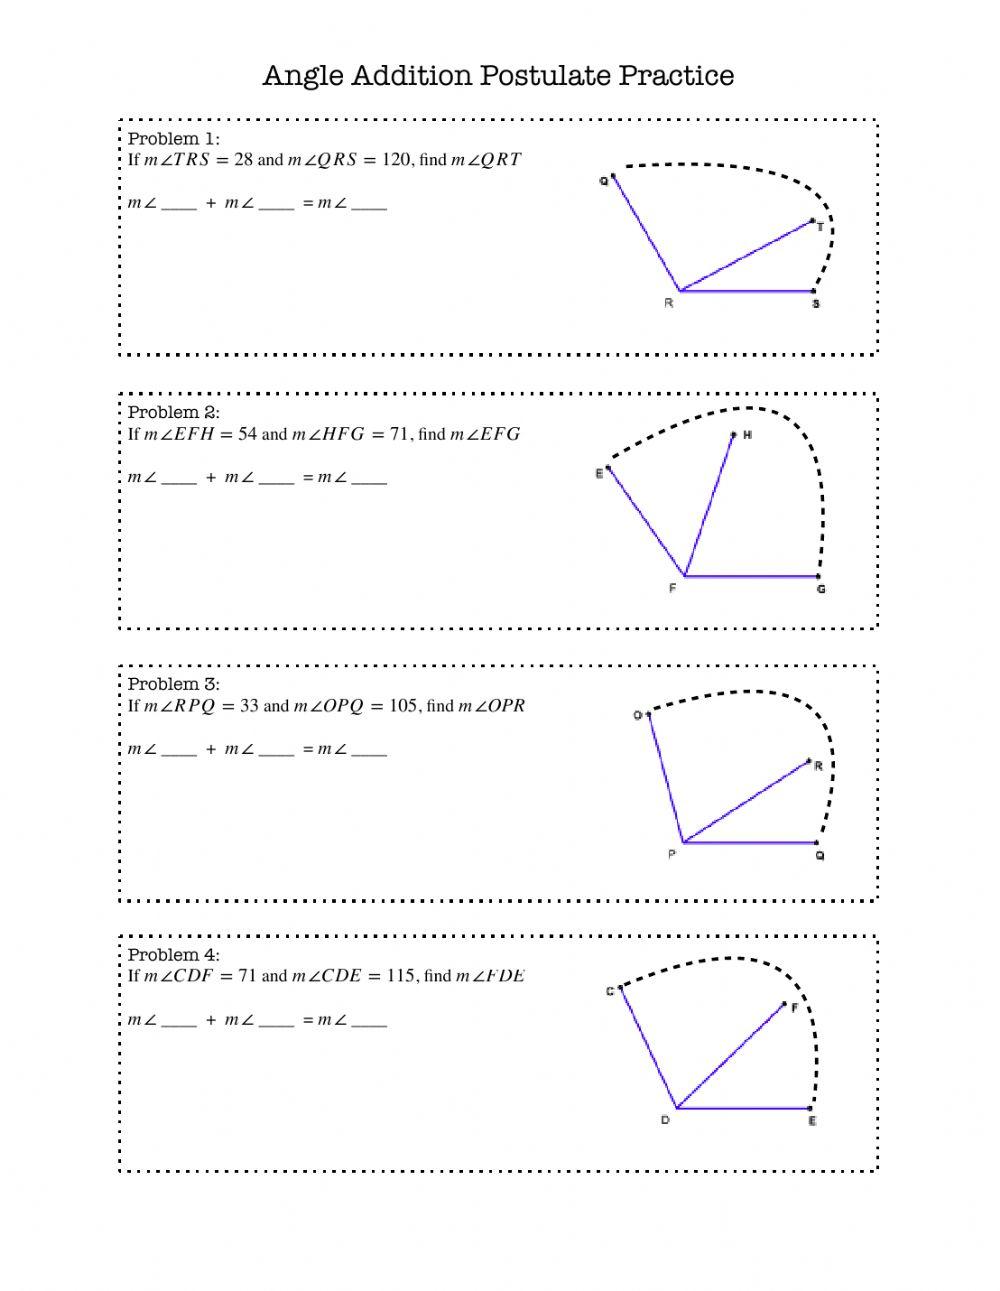 Angle Addition Postulate Numerical Practice